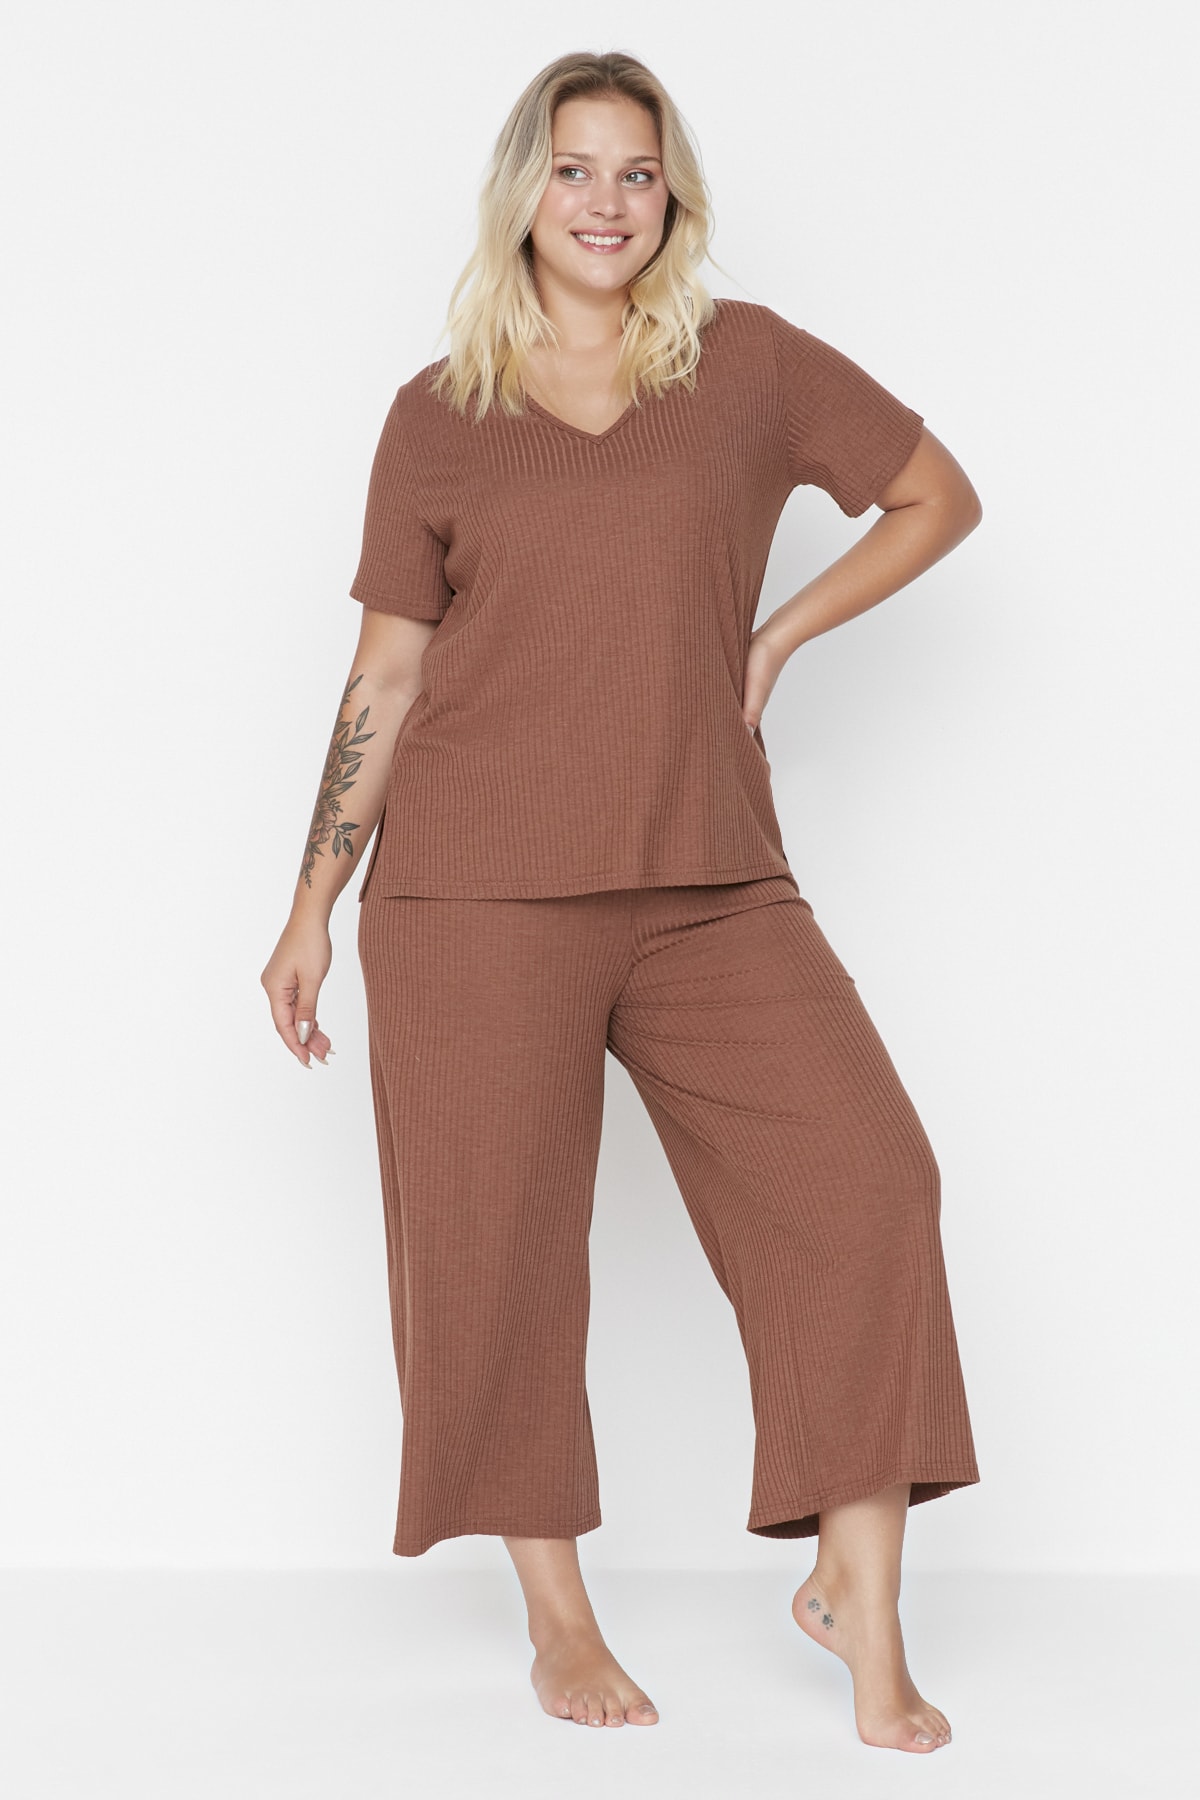 Trendyol Curve Brown Knitted Pajamas Set